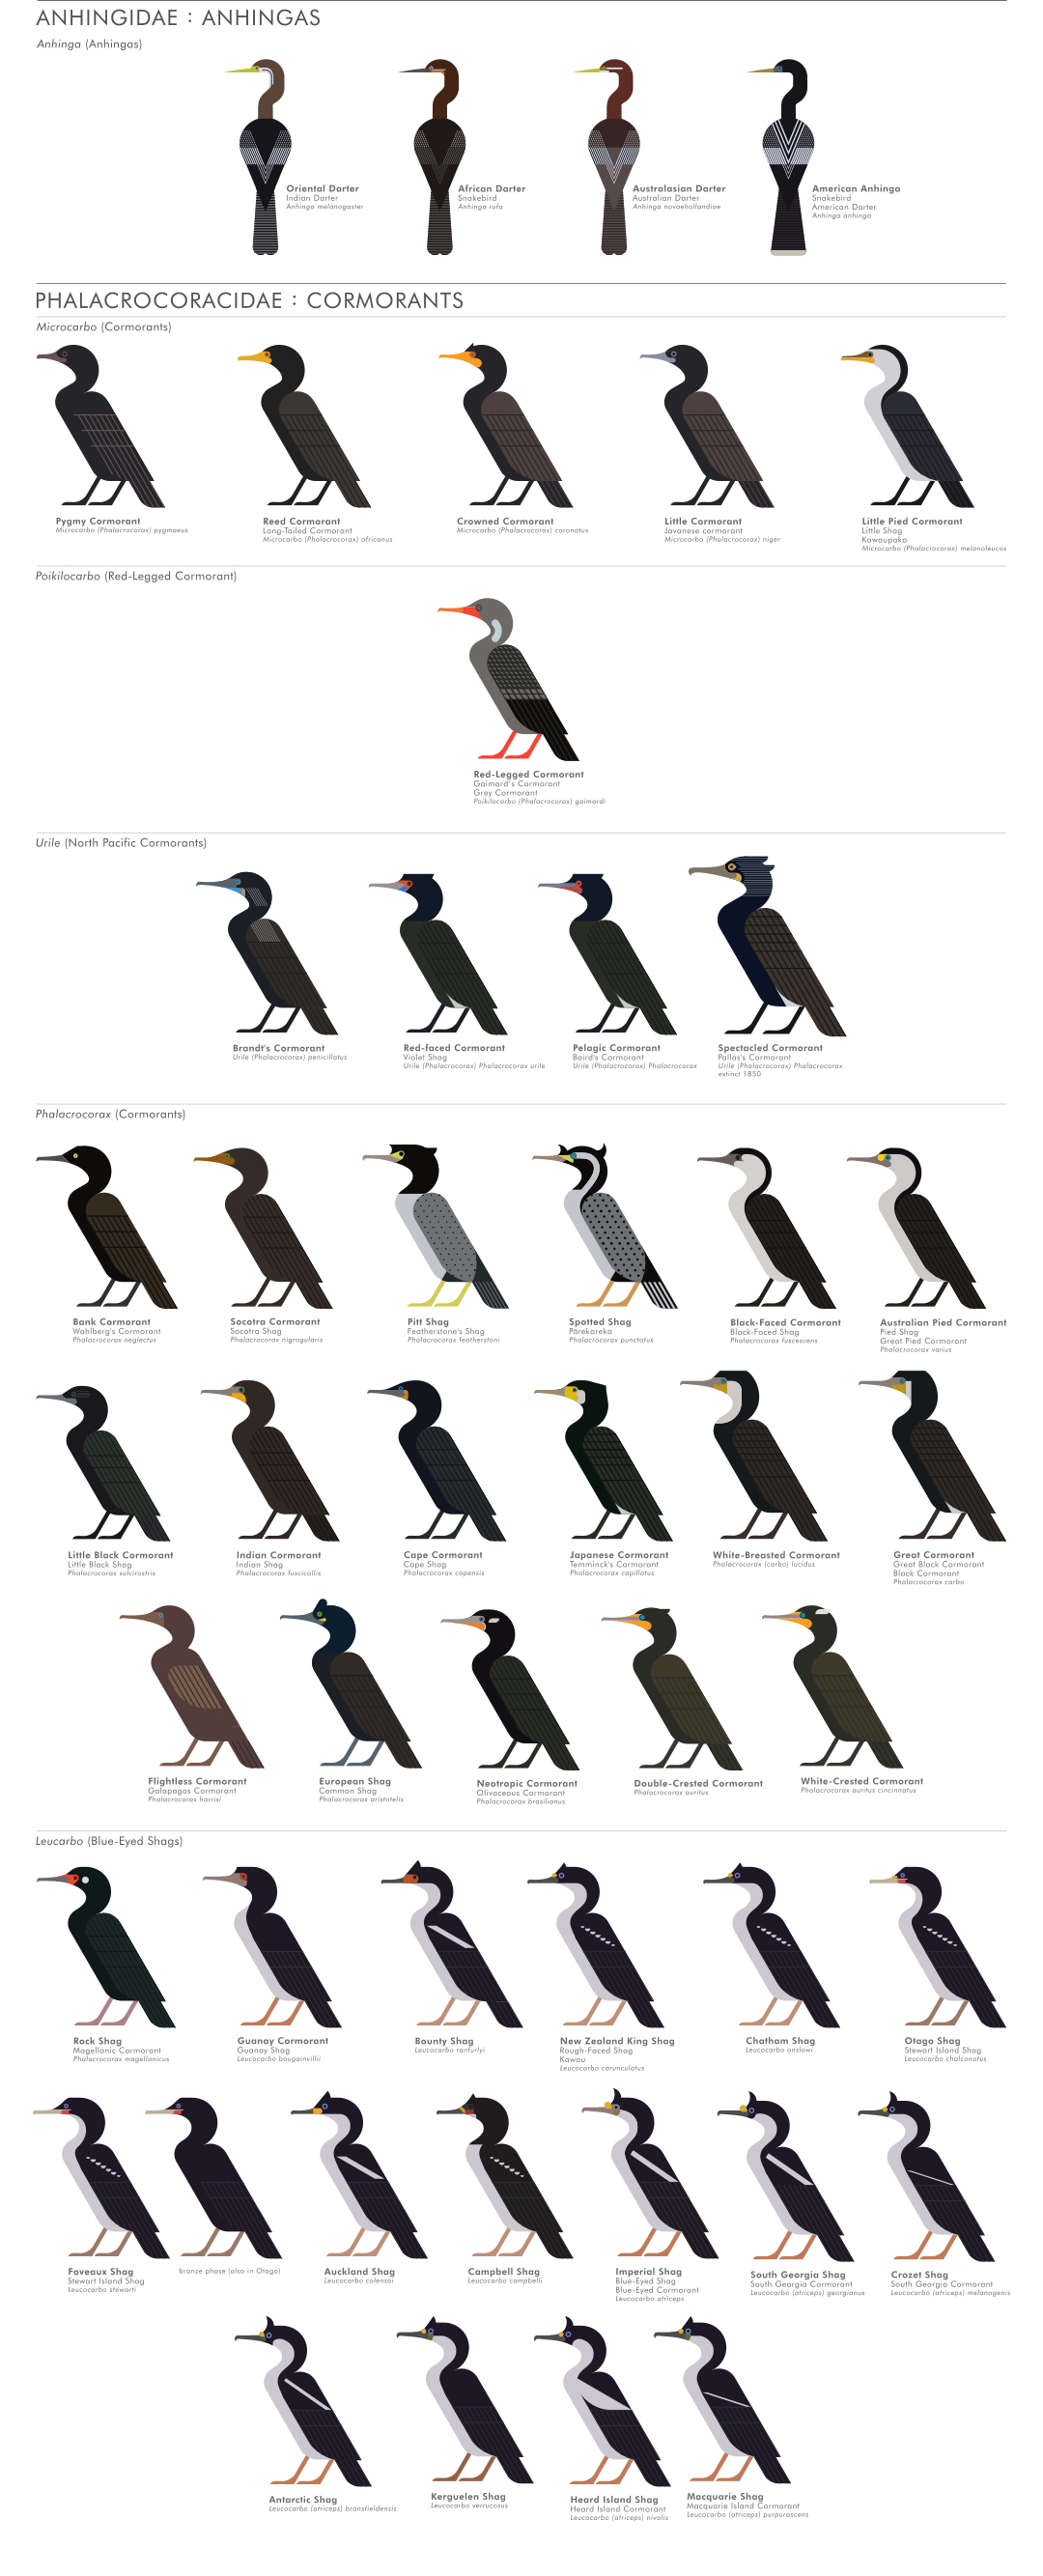 scott partridge - ave - avian vector encyclopedia - cormorants and darters Anhingidae Phalacrocoracidae Suliformes- bird vector art